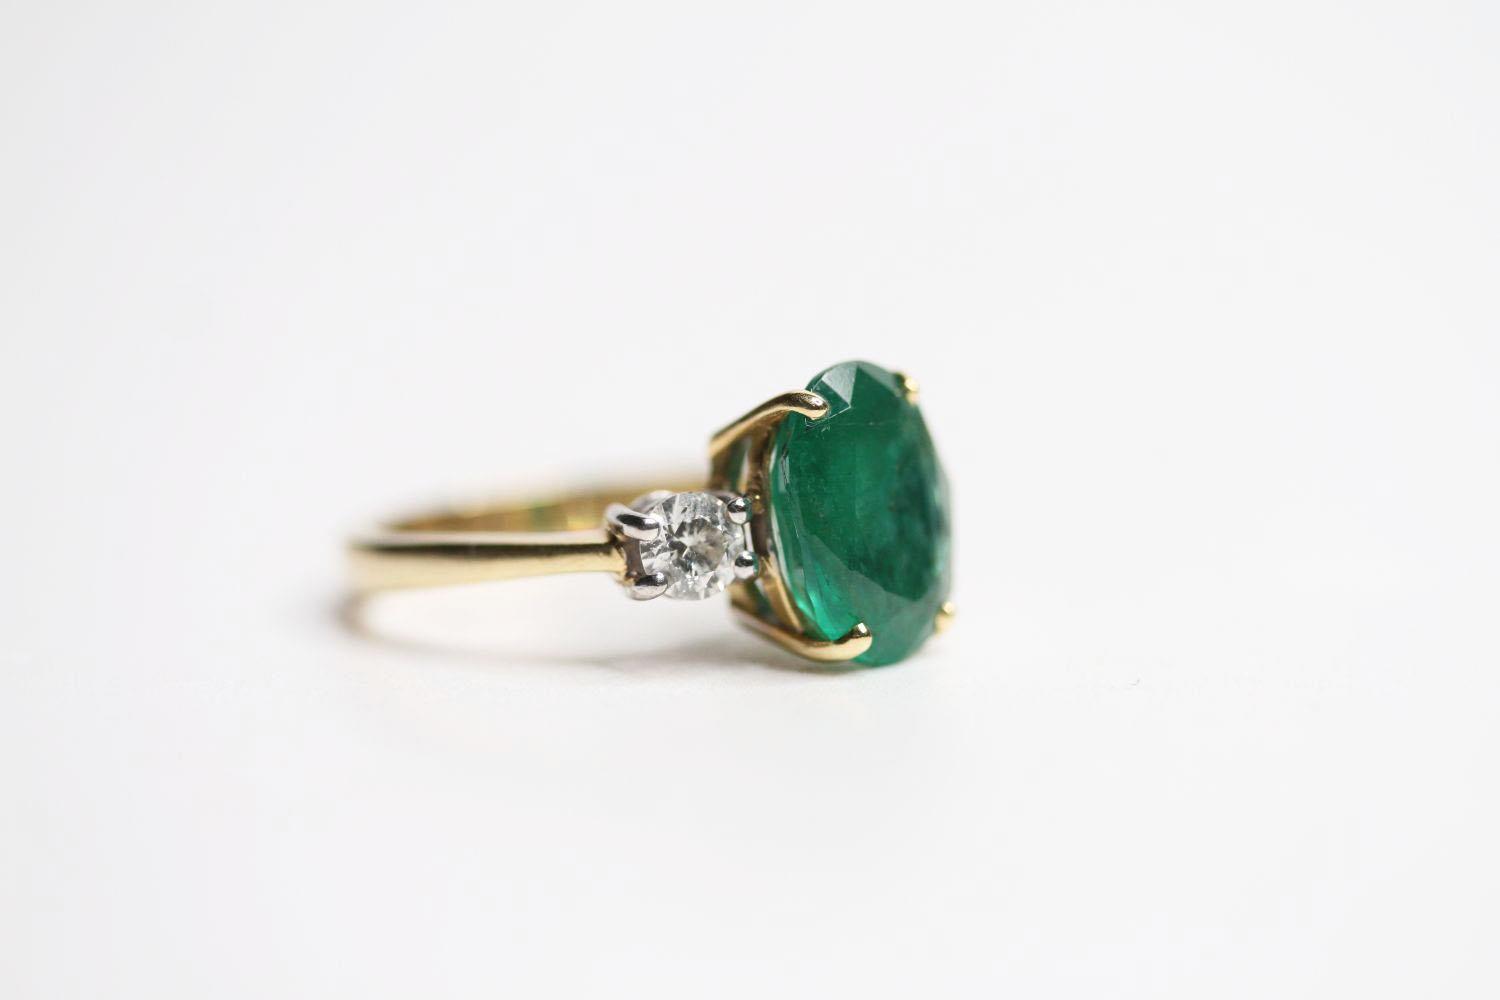 Oval Emerald & Diamond 3 Stone Ring, claw set, estimated emerald 2.00ct, estimated diamonds 0.30ct - Image 2 of 3